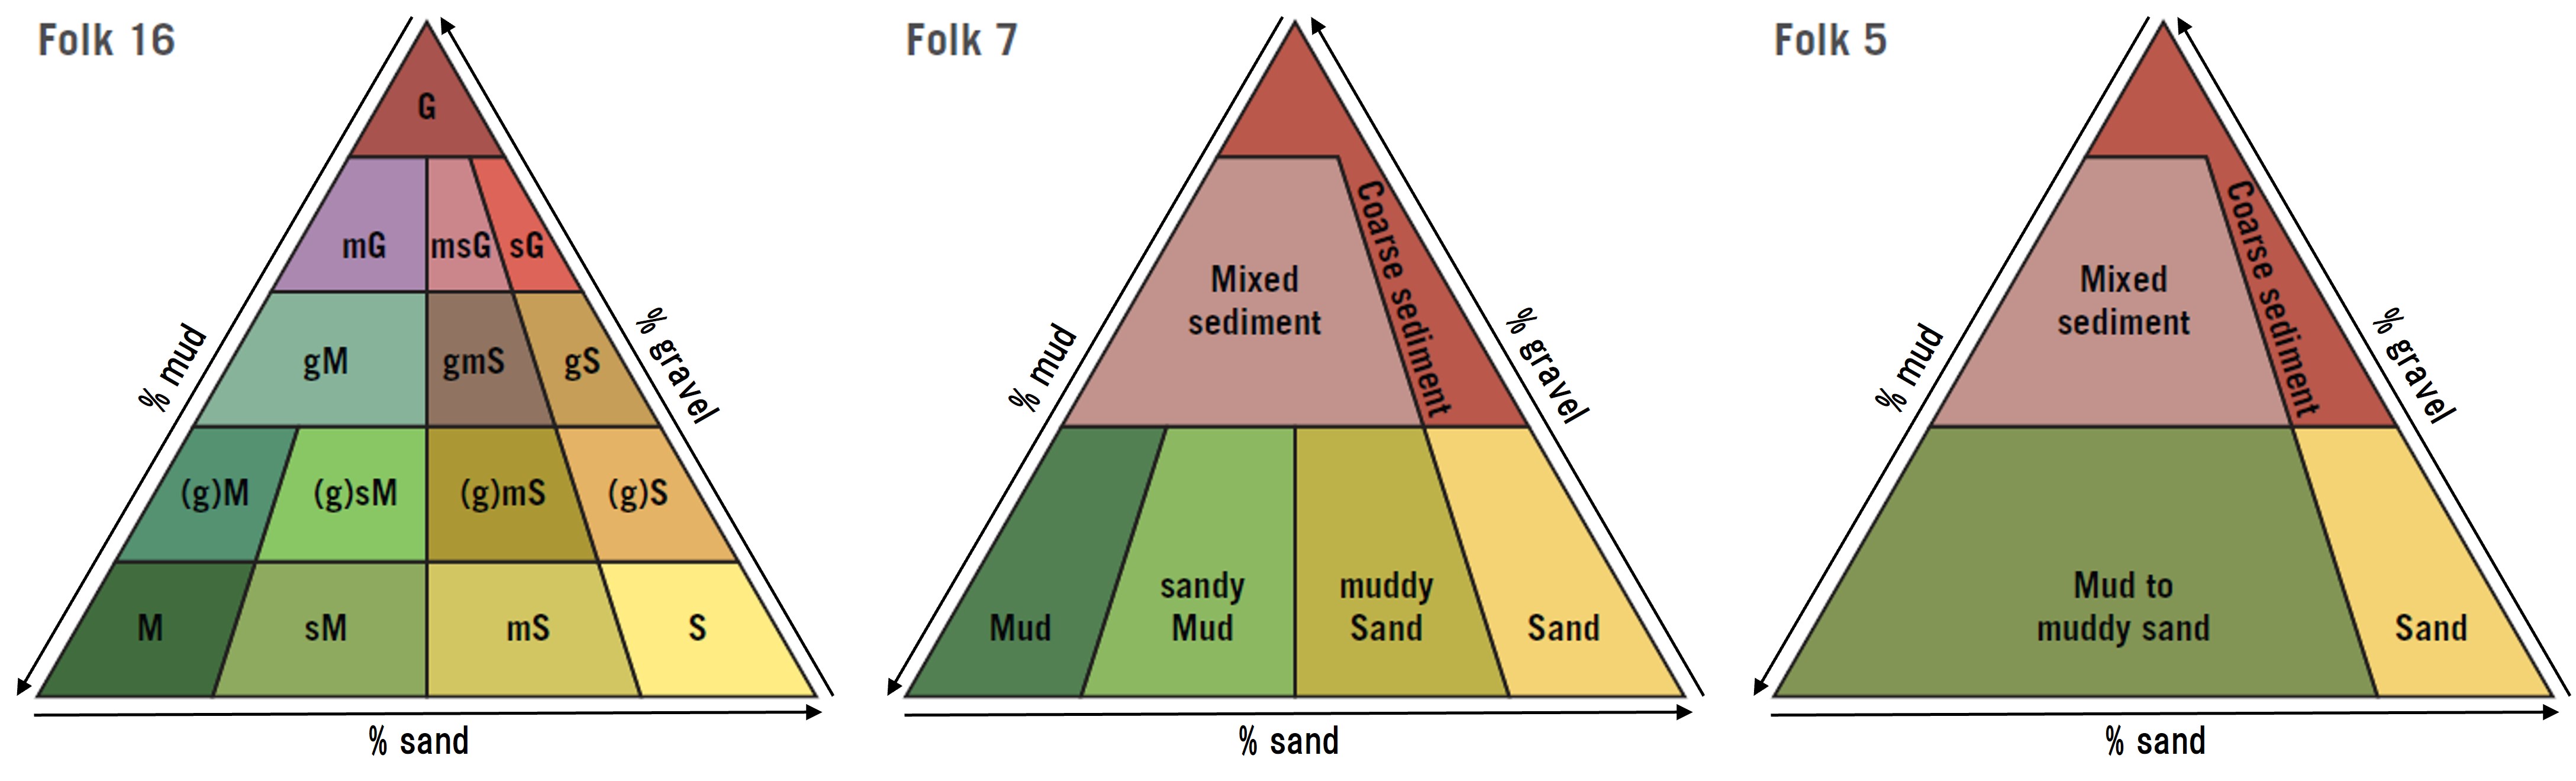 Folk classification of seabed-sediment map